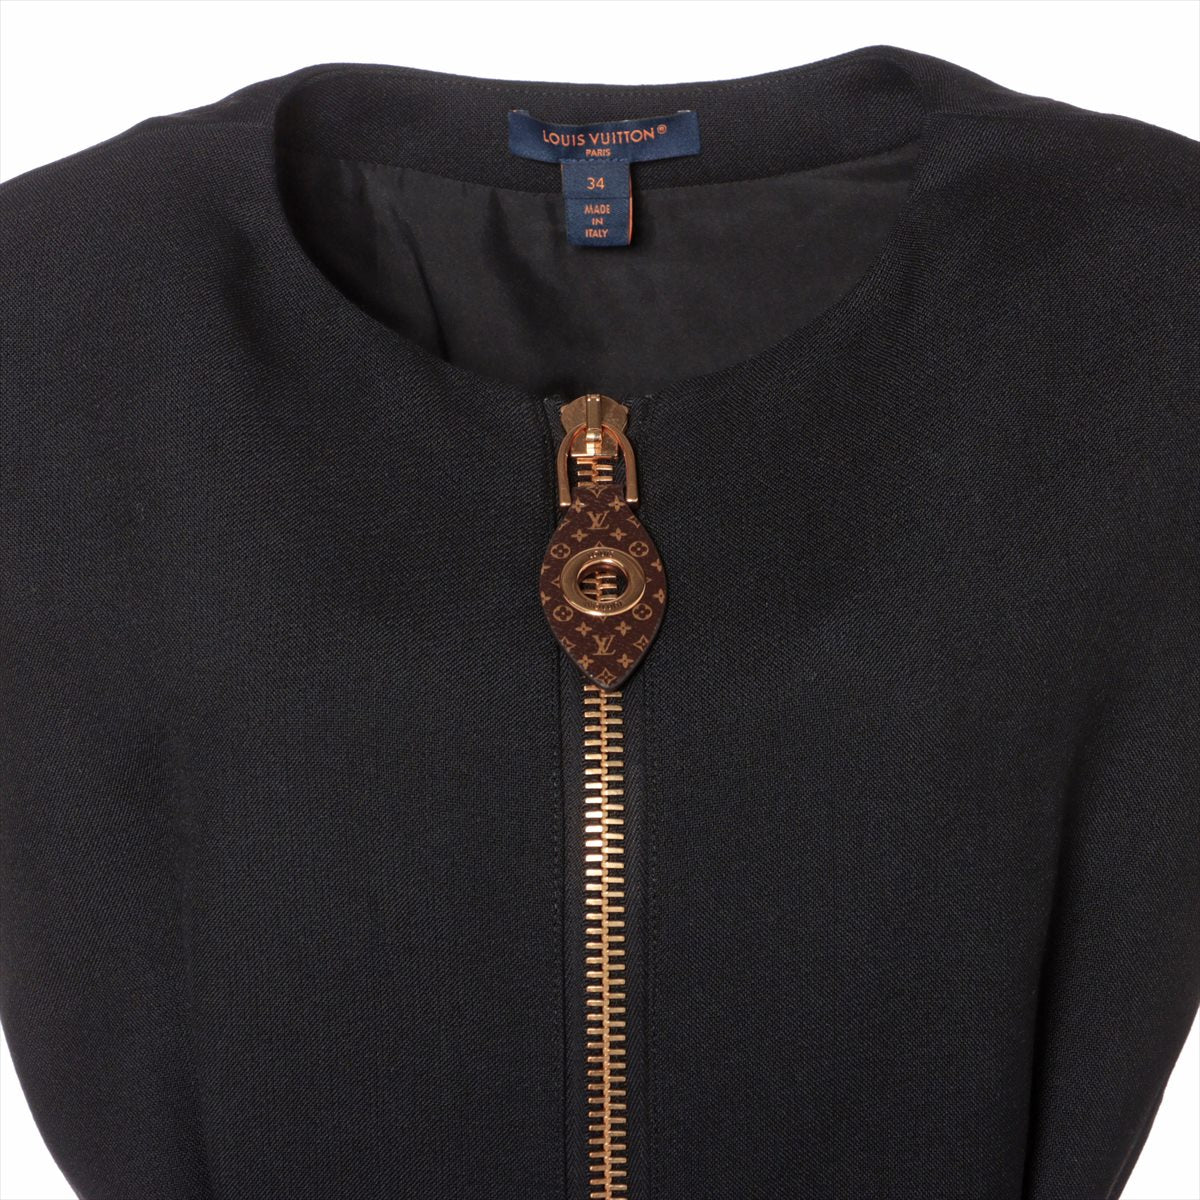 Louis Vuitton 23AW wool x silk northern sleeve onepiece 34 ladies black 1ABQRA RW232W monogram XXL detailed cap sleeve dress